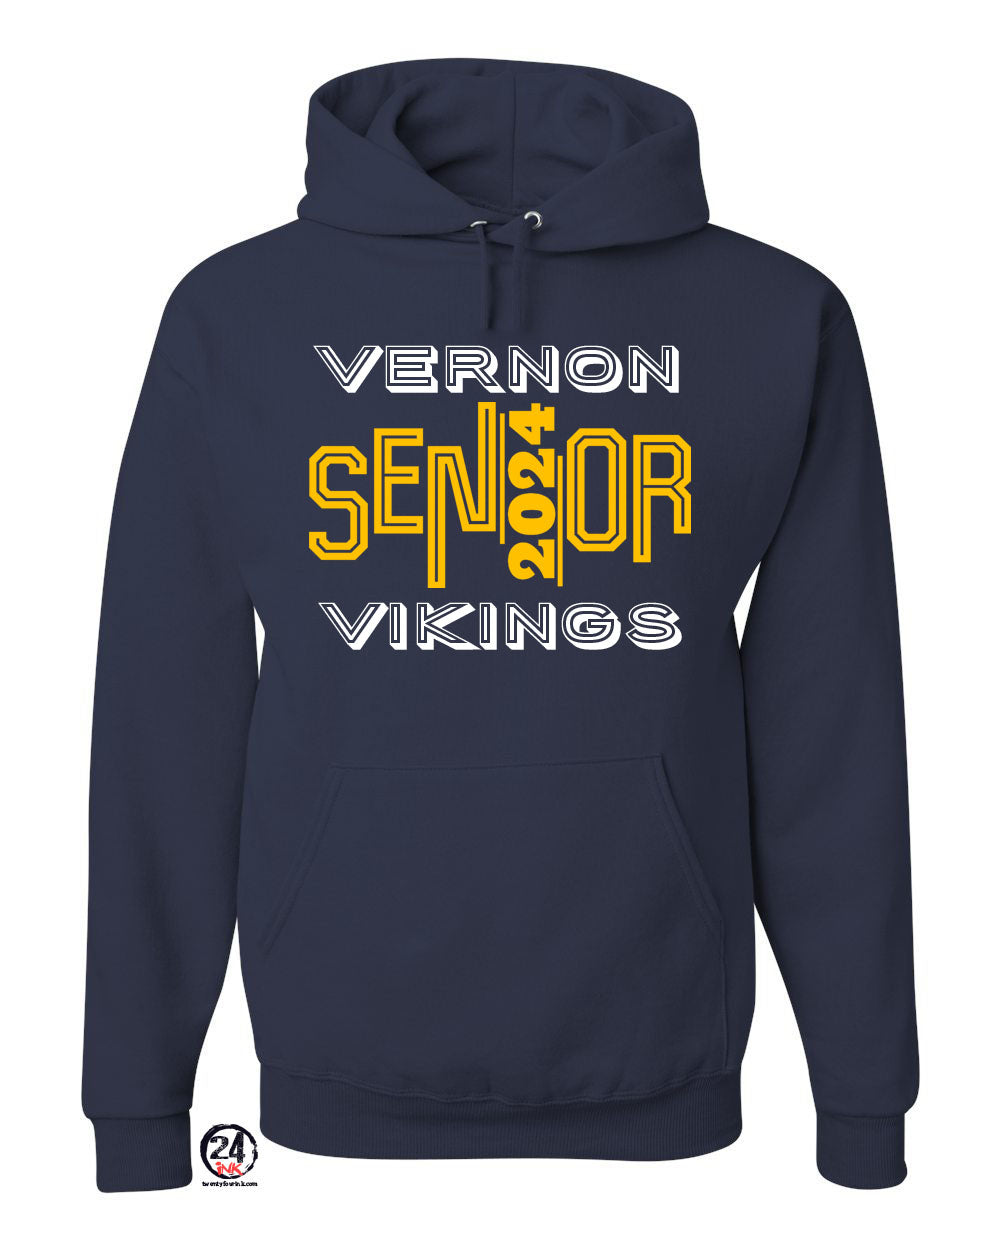 VTHS Design 6 Hooded Sweatshirt